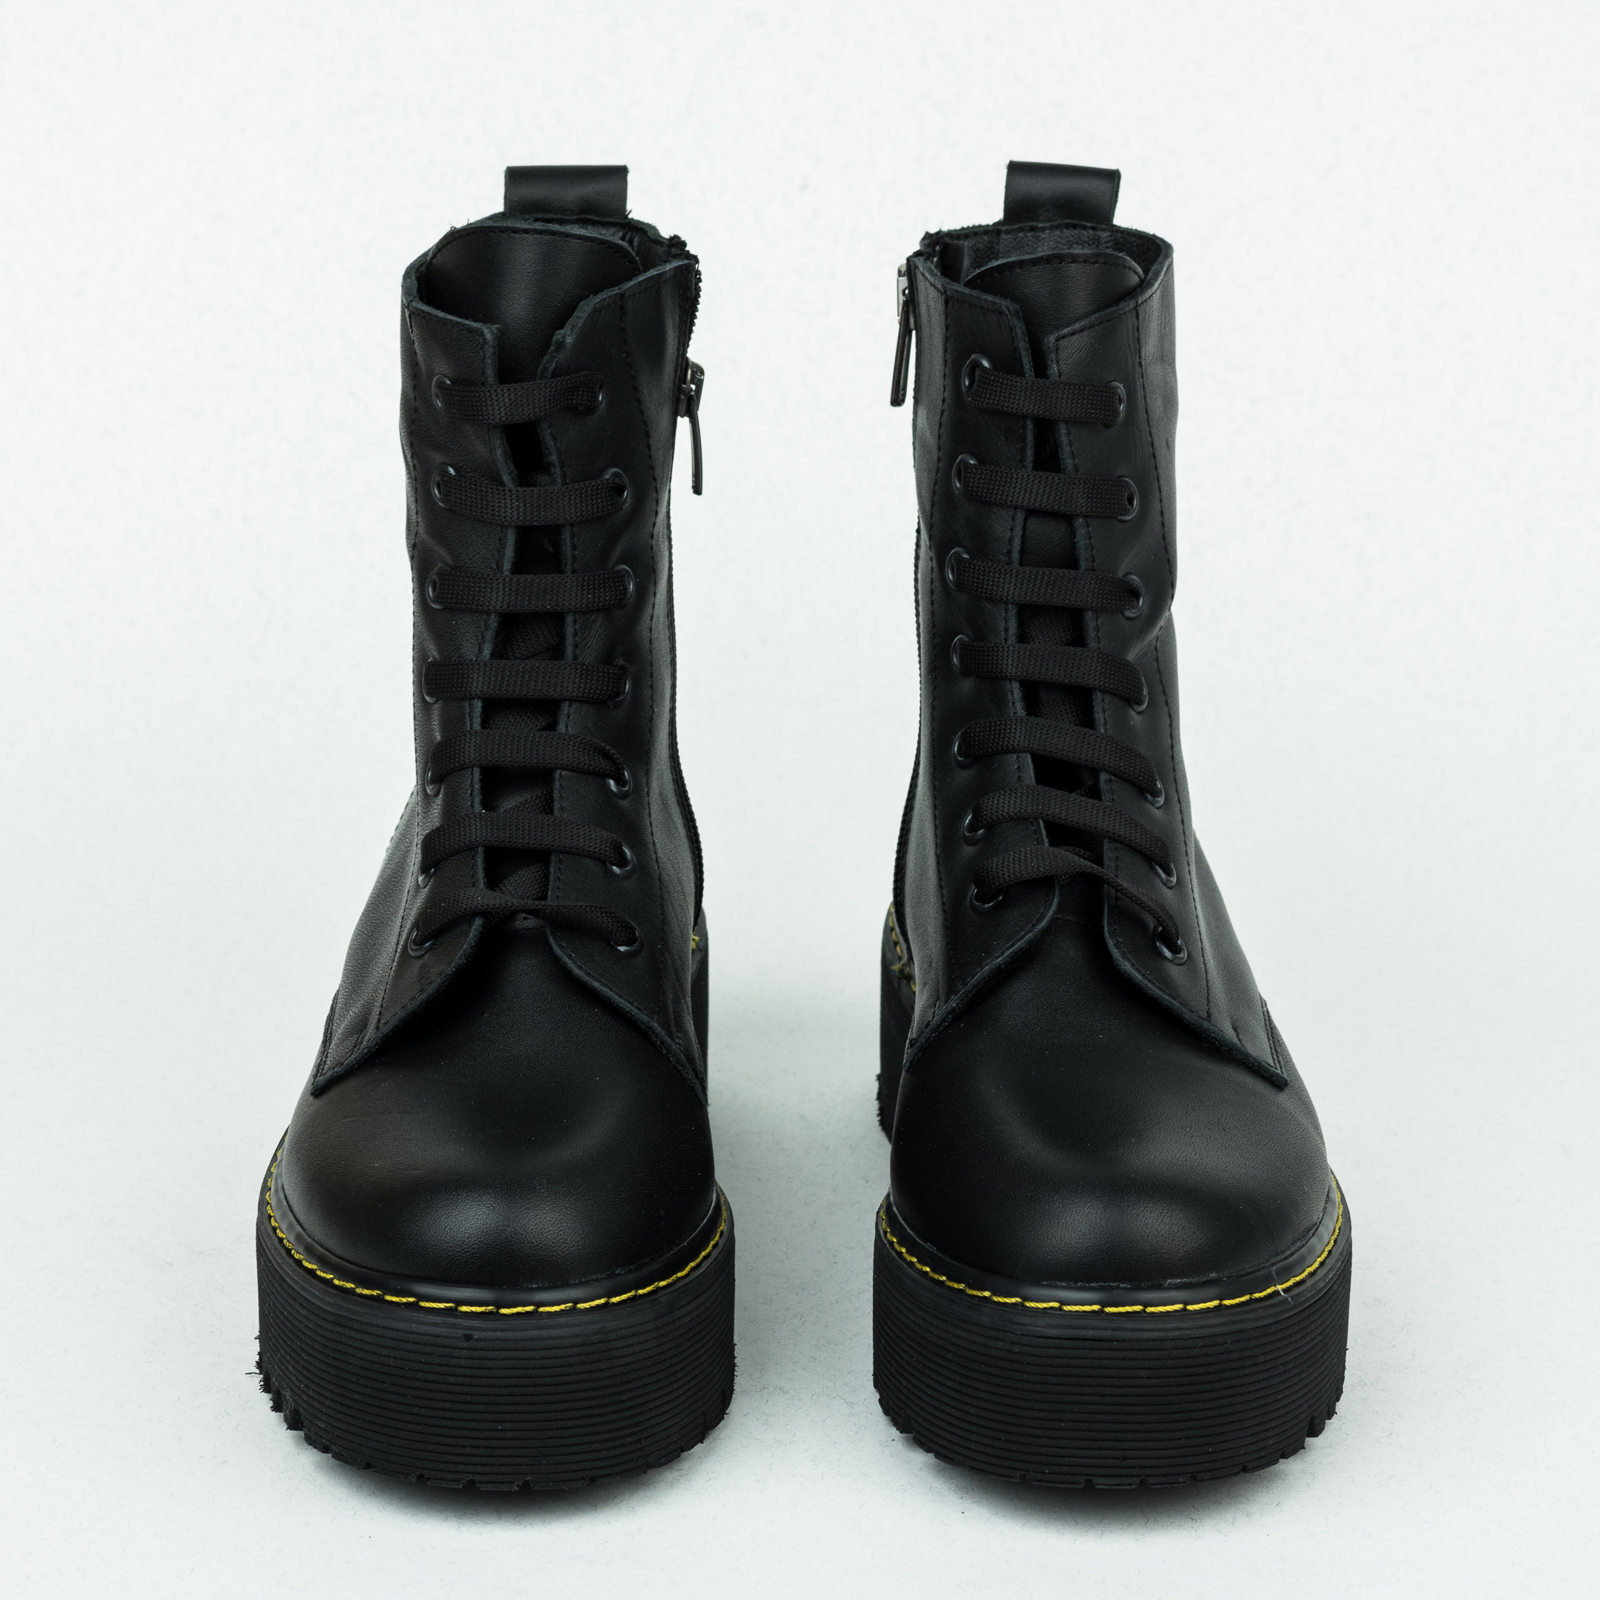 Leather WATERPROOF boots B207 - BLACK